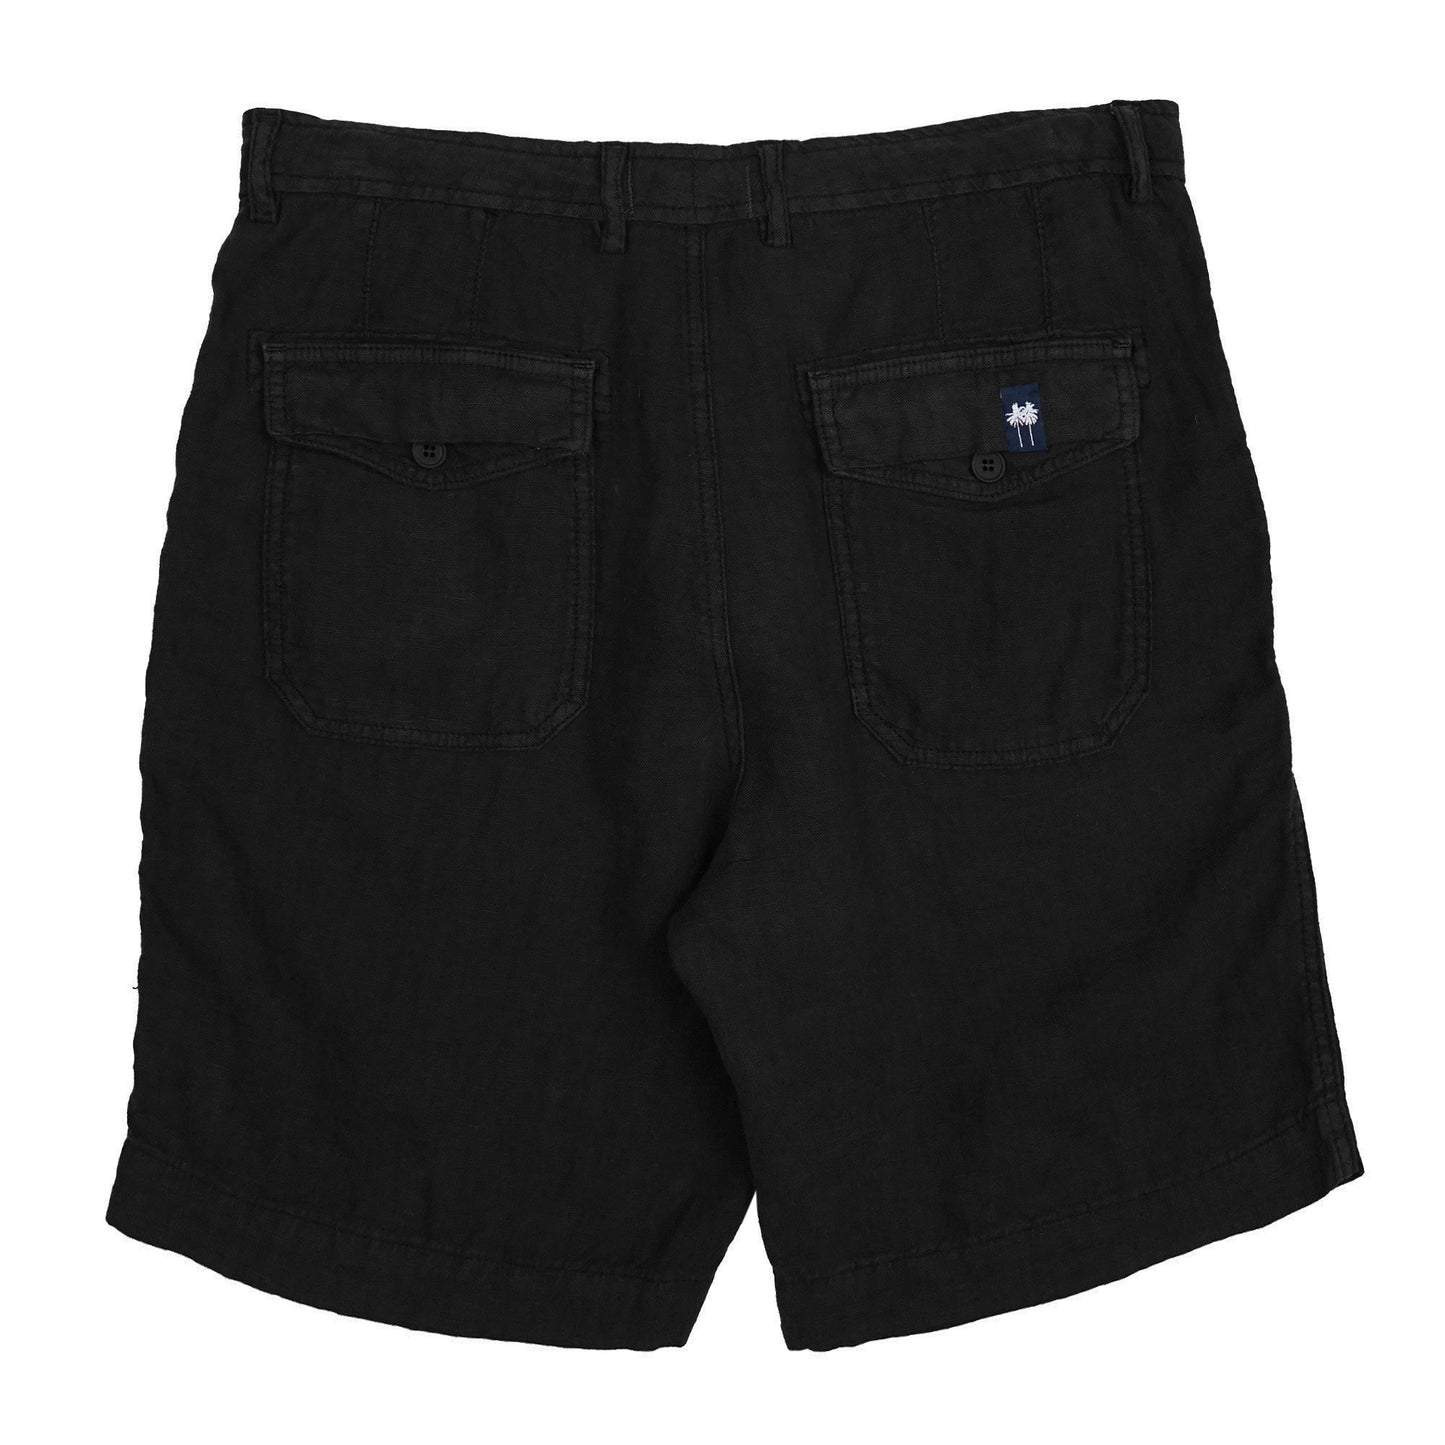 Palm Springs Black Linen Shorts